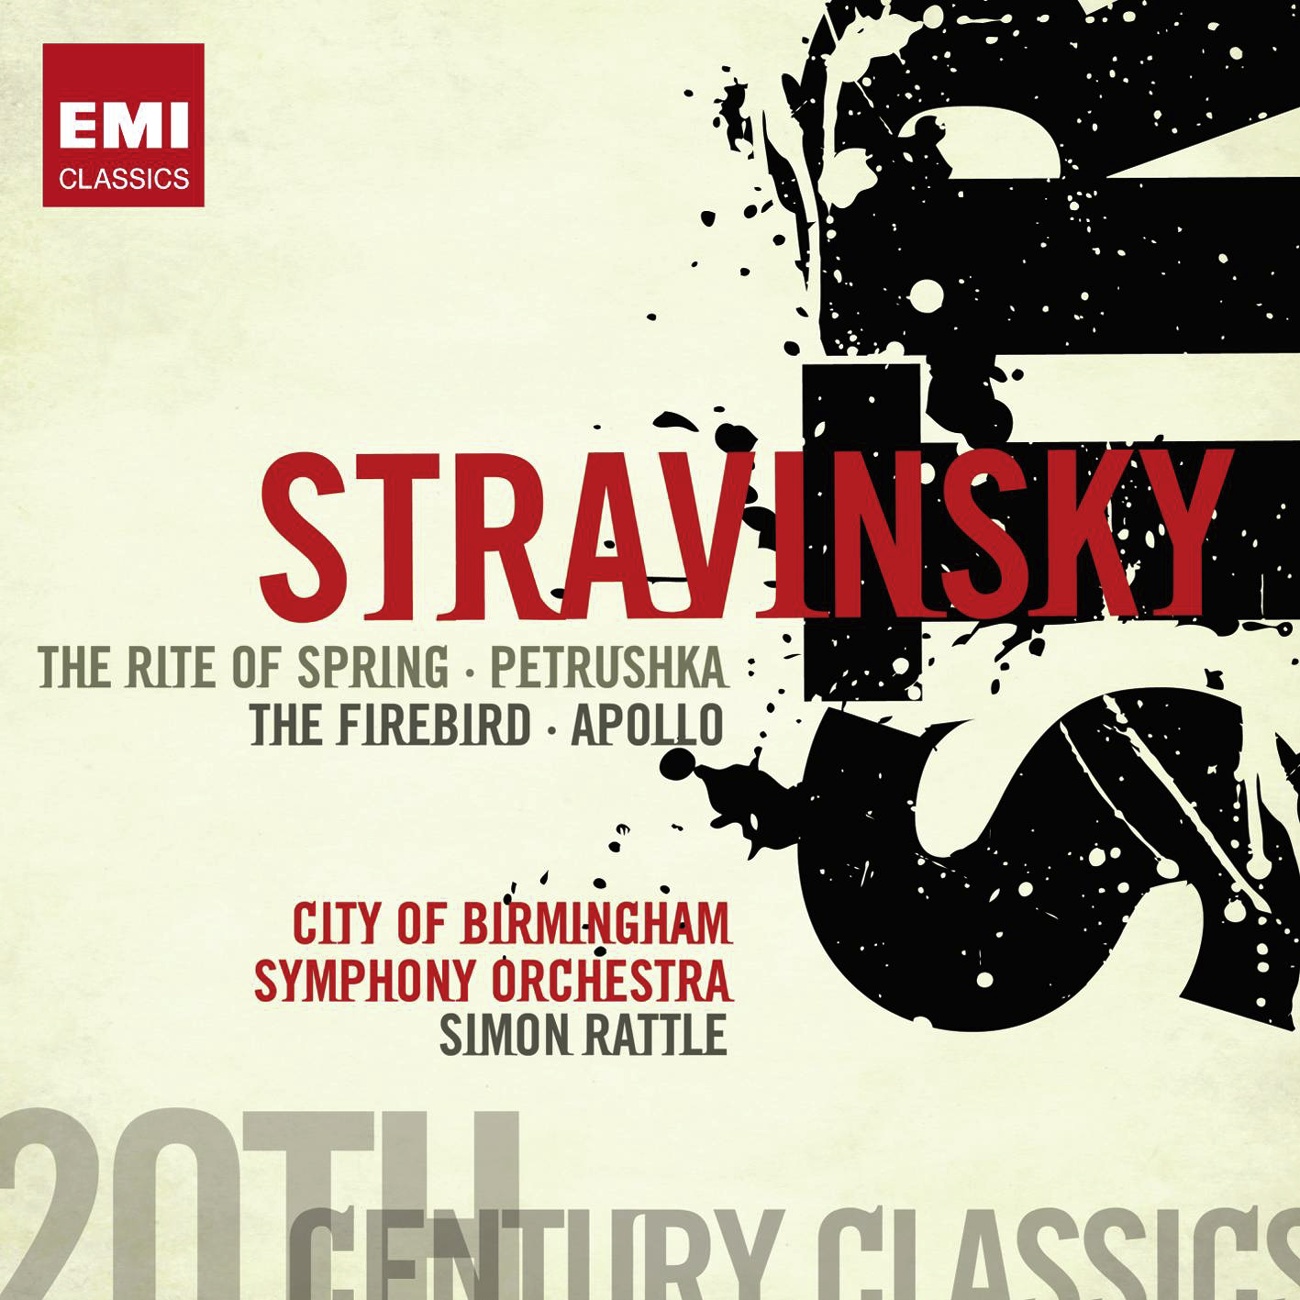 20th Century Classics: Igor Stravinsky